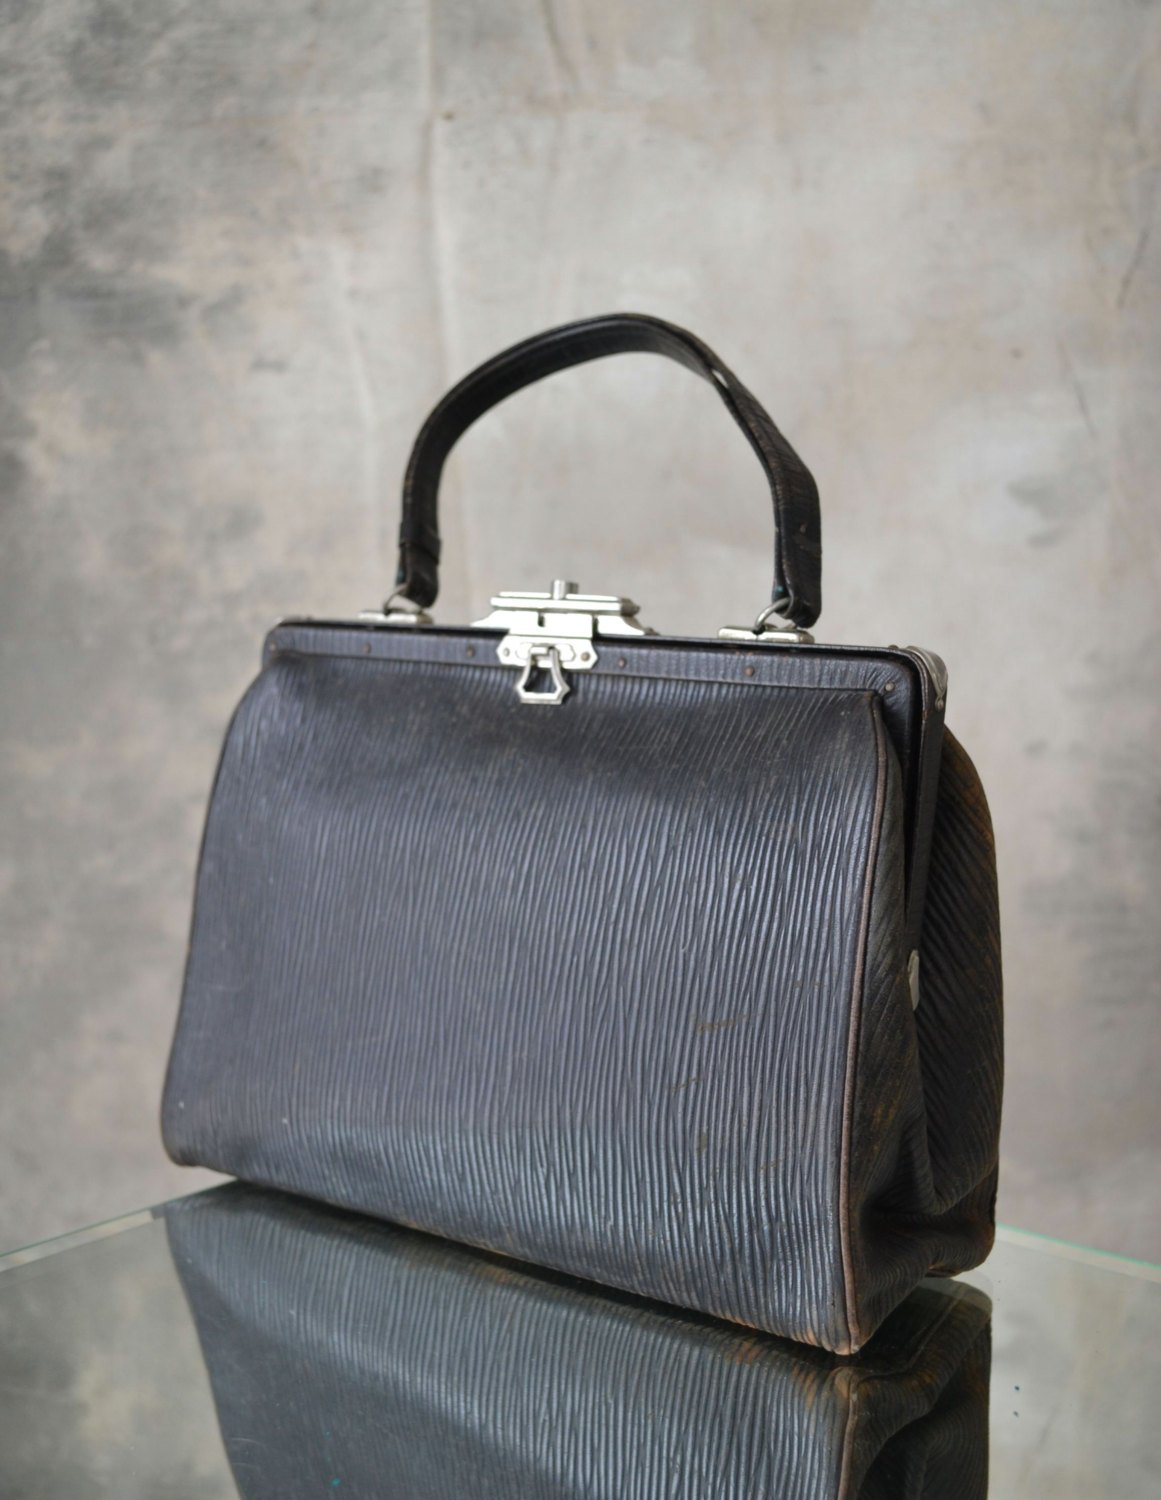 Vintage 1904 Edwardian Victorian Handbag, Brass Clasp and Textured Leather Purse, Hand Held Leather Handbag